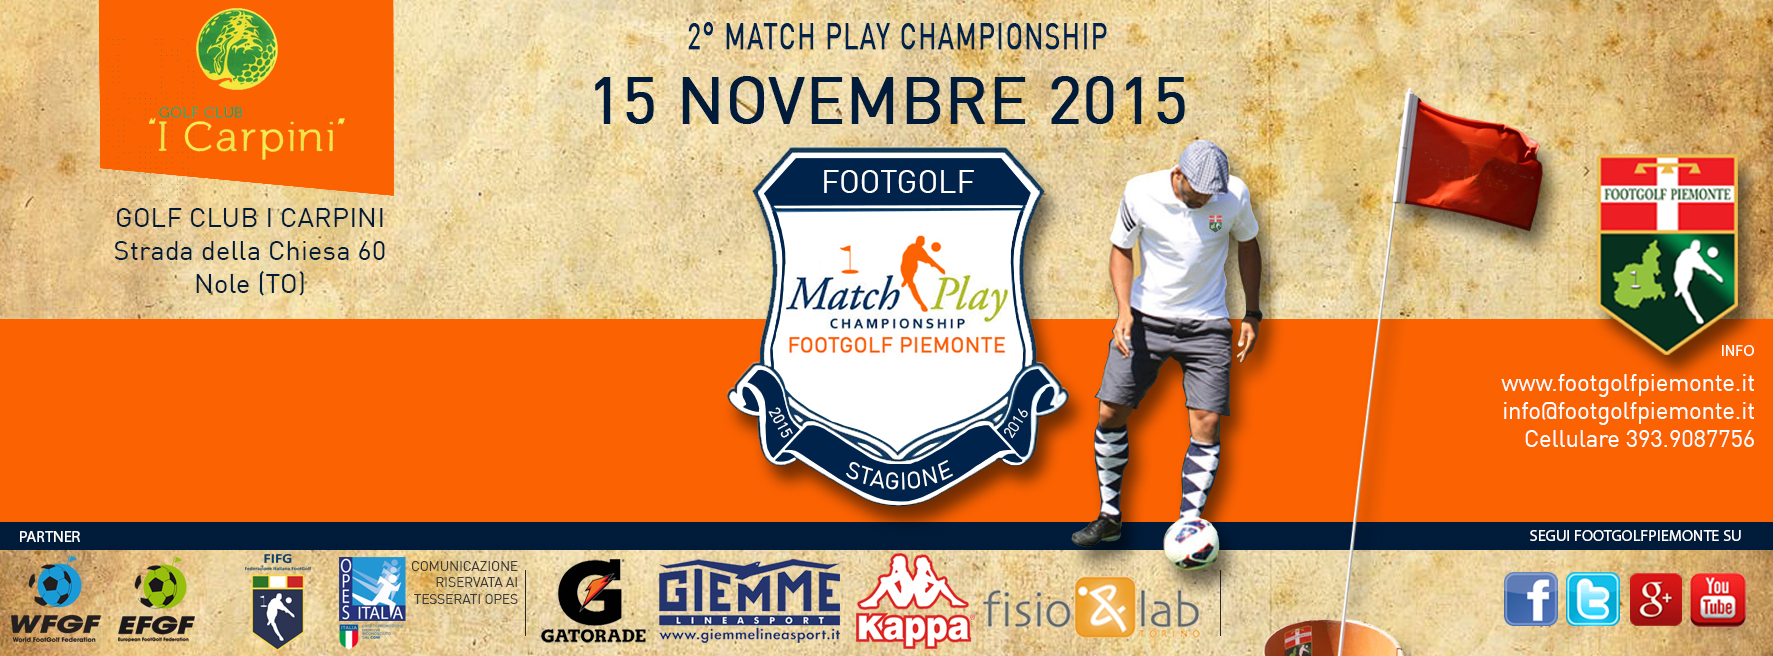 Locandina 2 tappa Match Play Footgolf Piemonte 2016 Nole TO domenica 15 novembre 2015